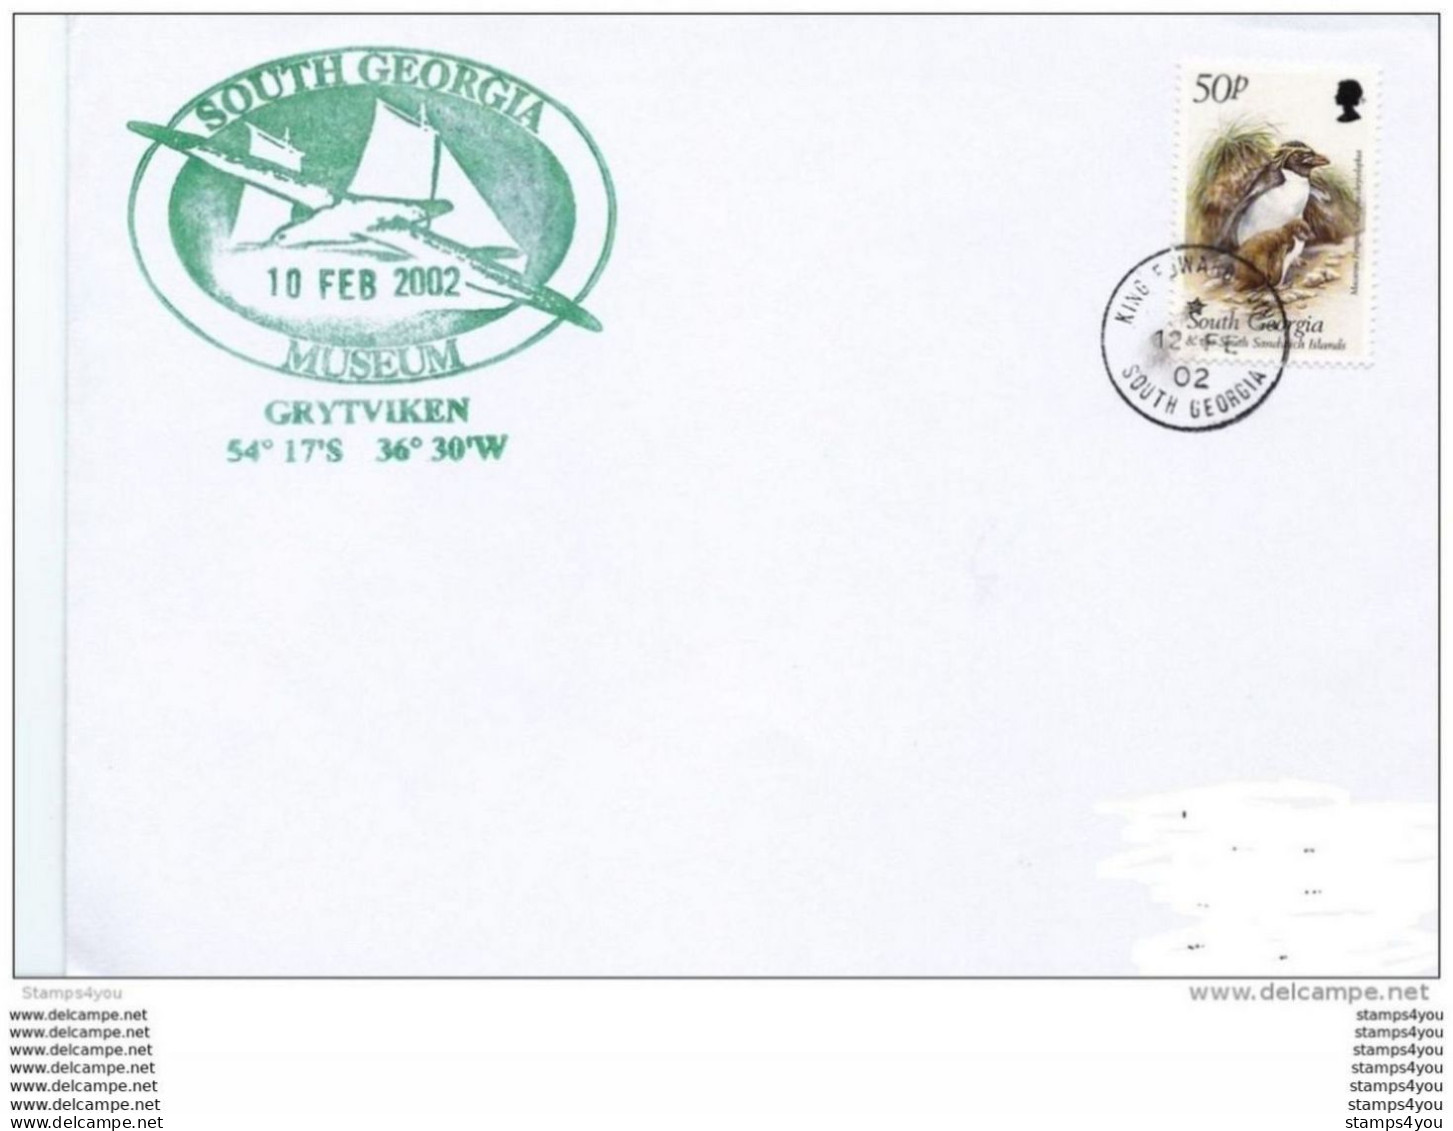 101 - 6 - Enveloppe De Géorgie Du Sud - Musée De Grytviken 2002 - South Georgia